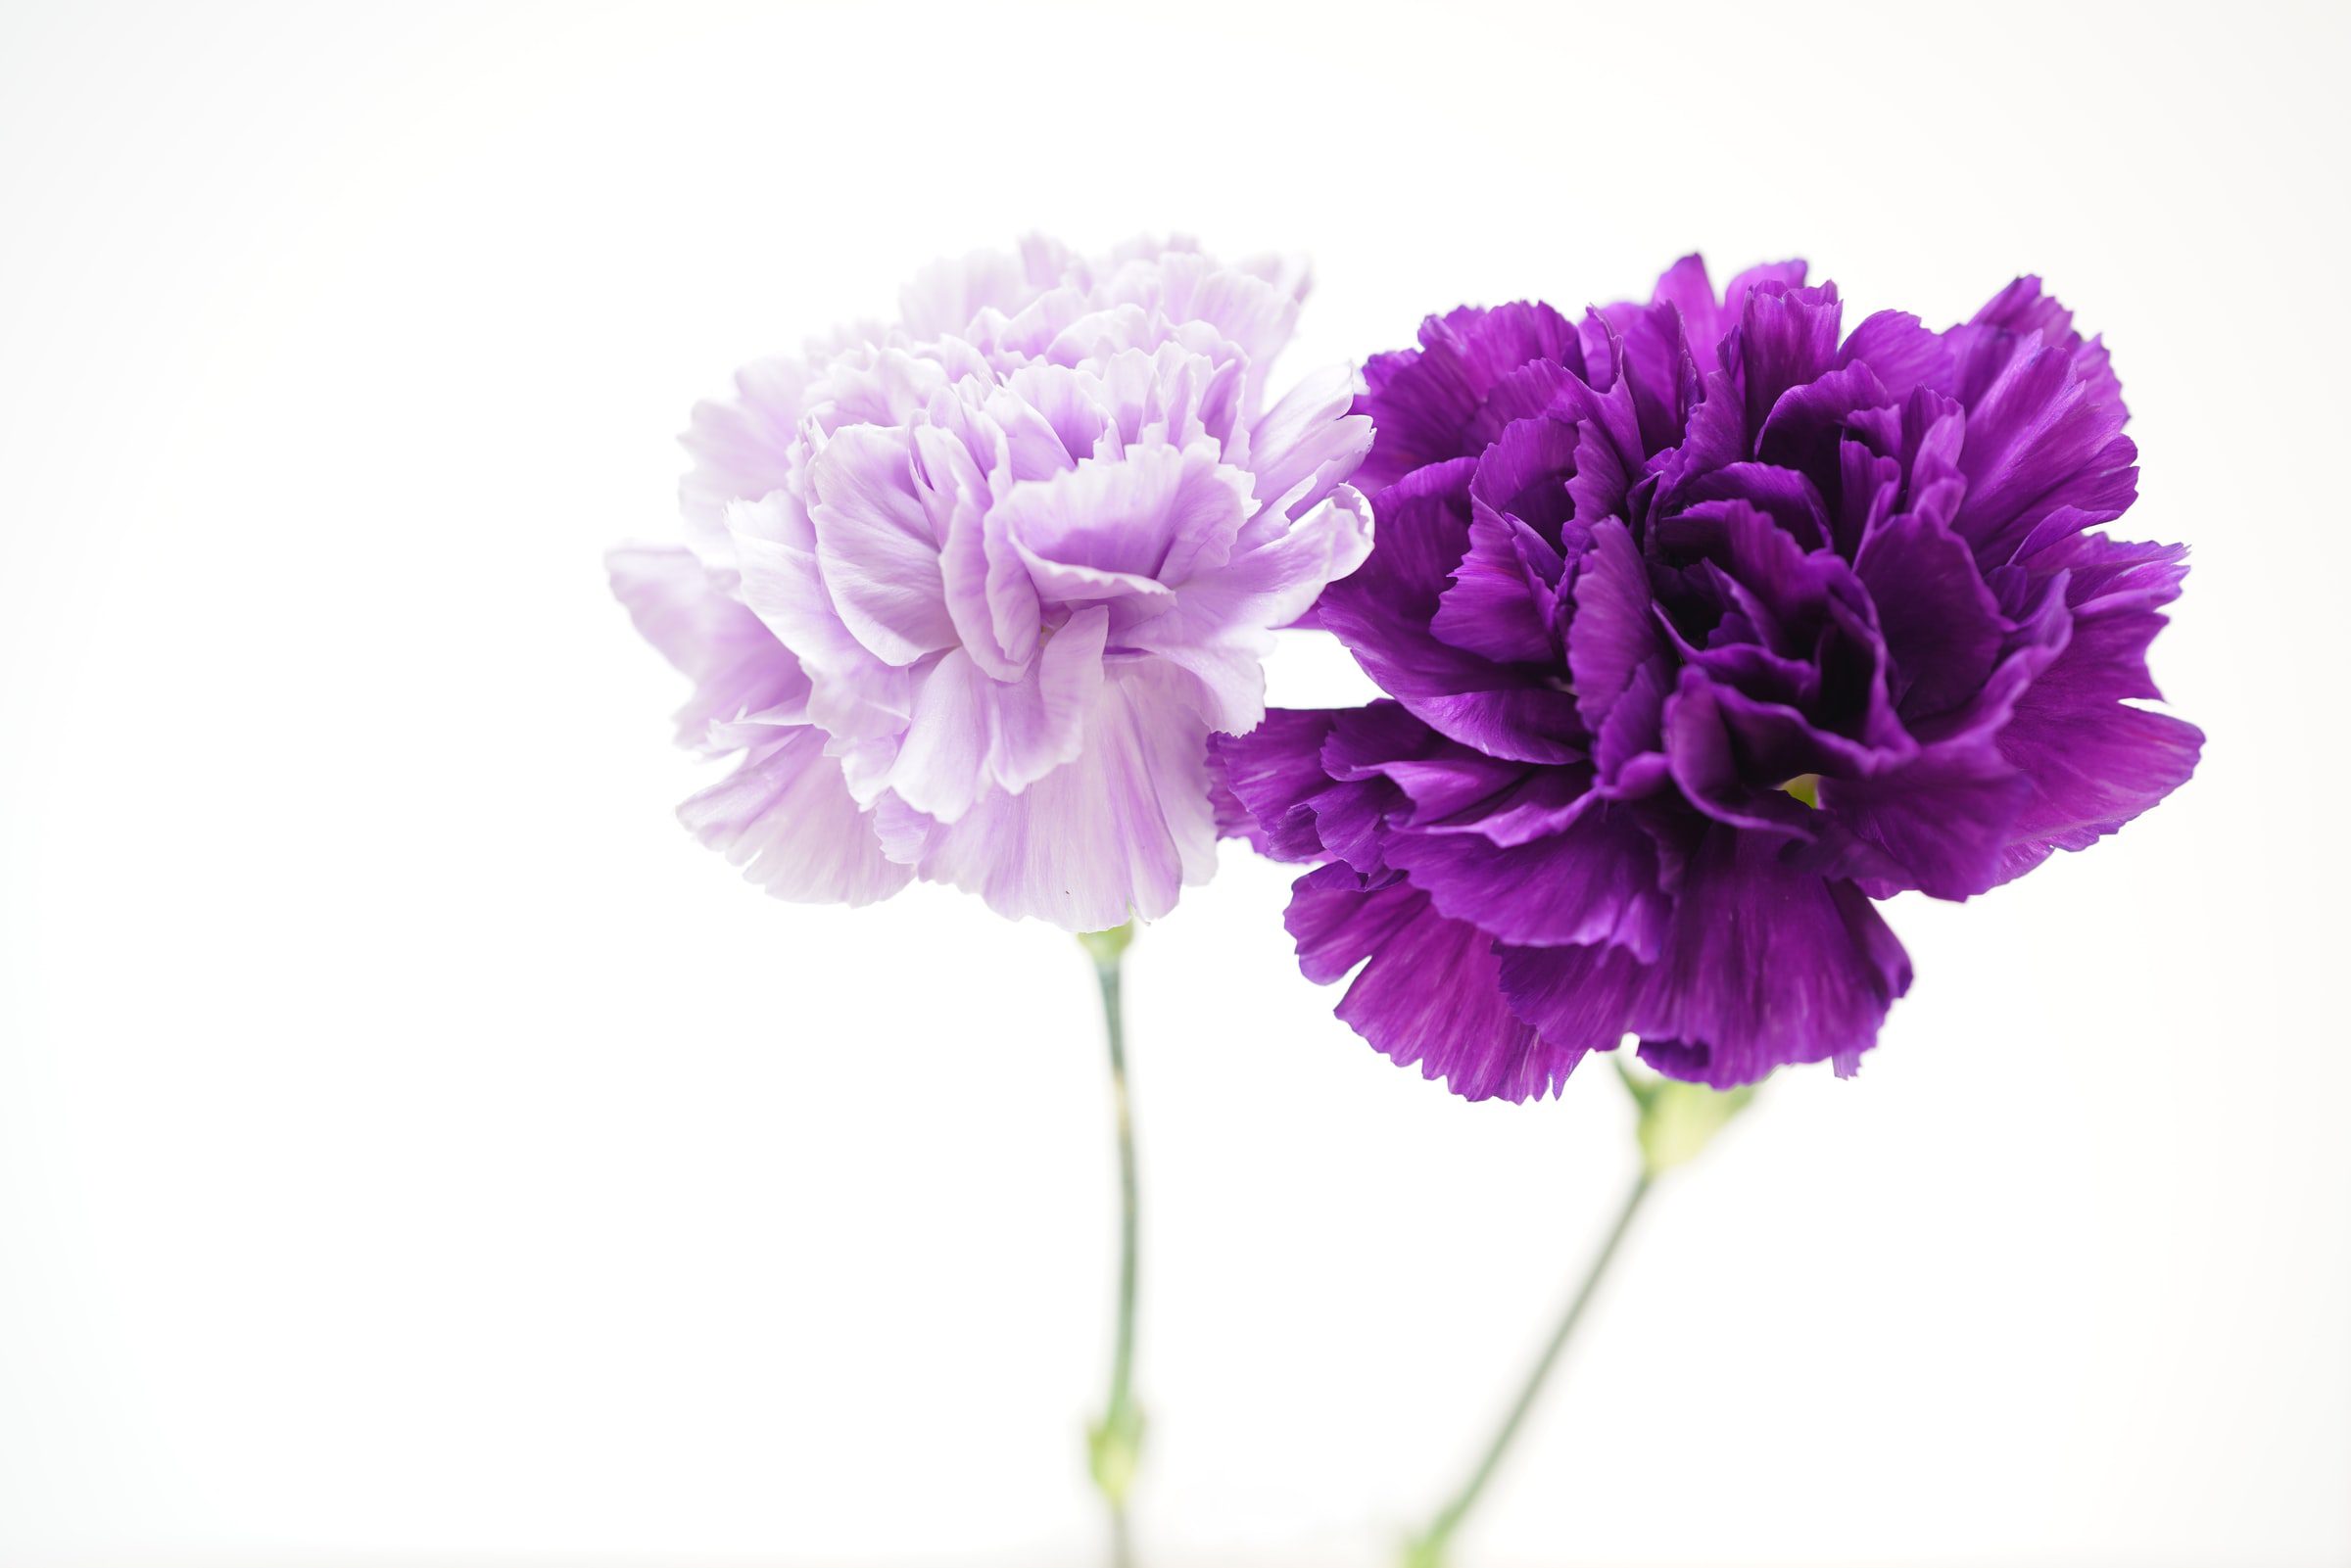 A couple of purple carnation flowers